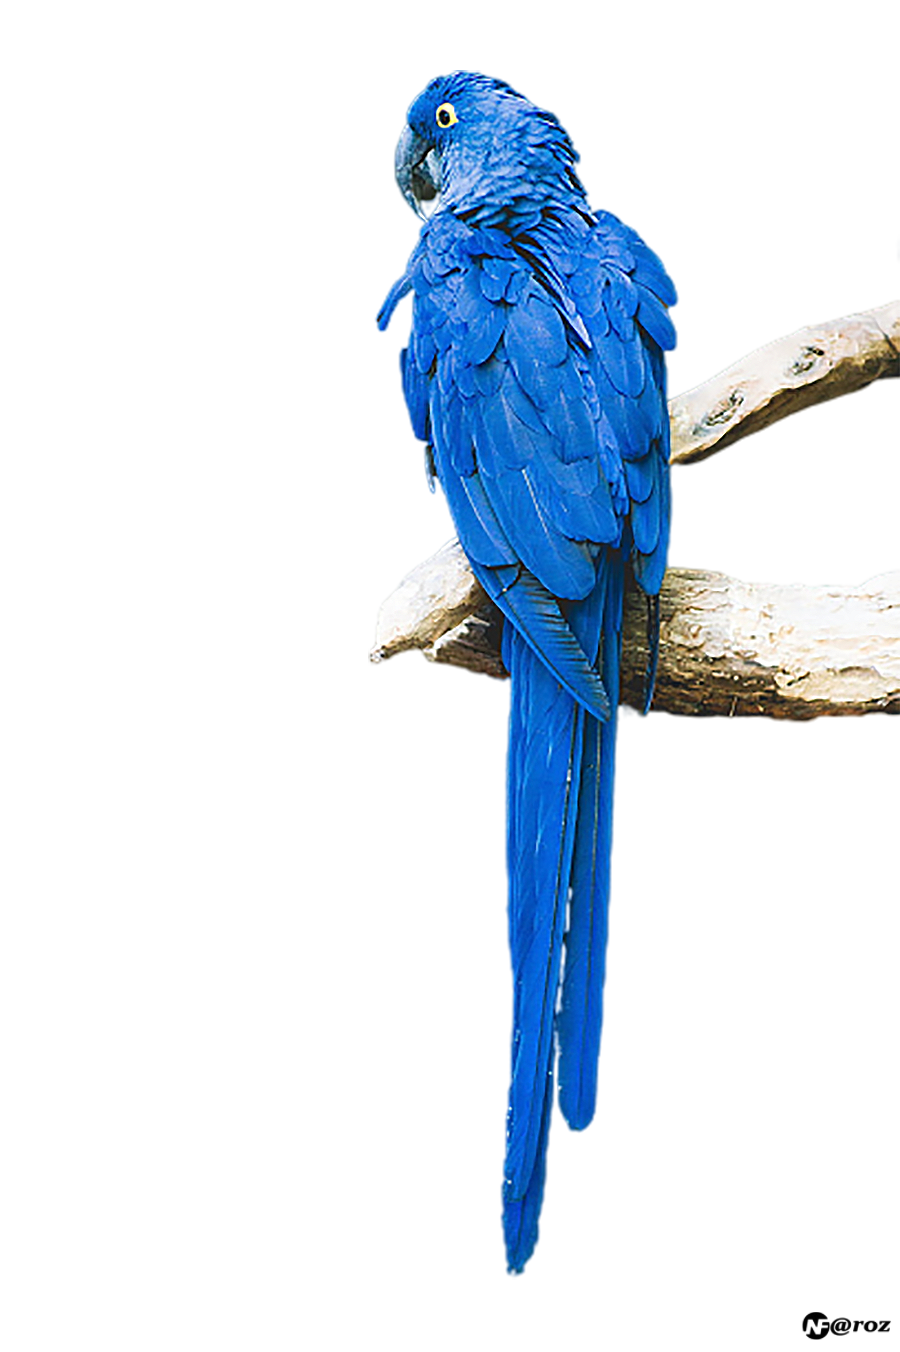 Papağan PNG - Parrot PNG